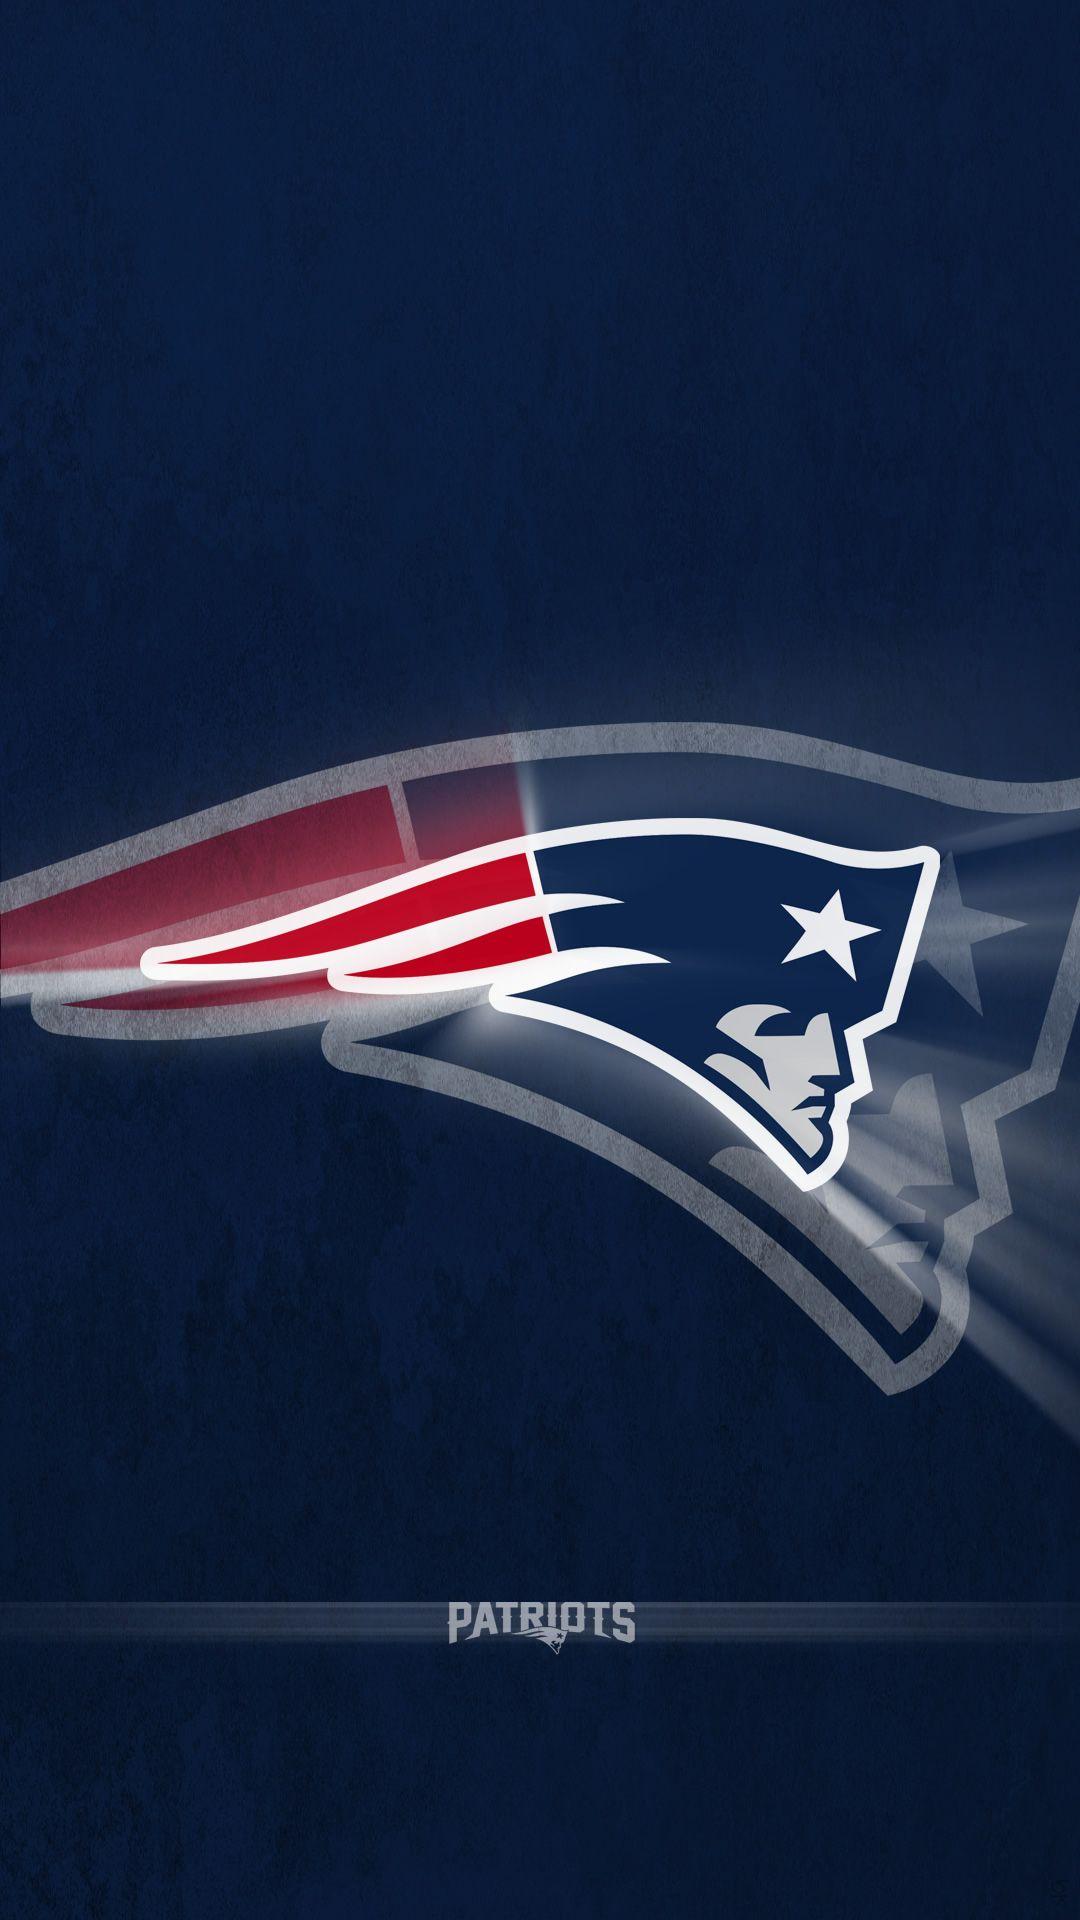 New England Patriots iPhone 6 Plus Wallpaper With highresolution 1080X1920  pixel Downl  Equipos nfl Imagenes de futbol americano Patriotas de  nueva inglaterra